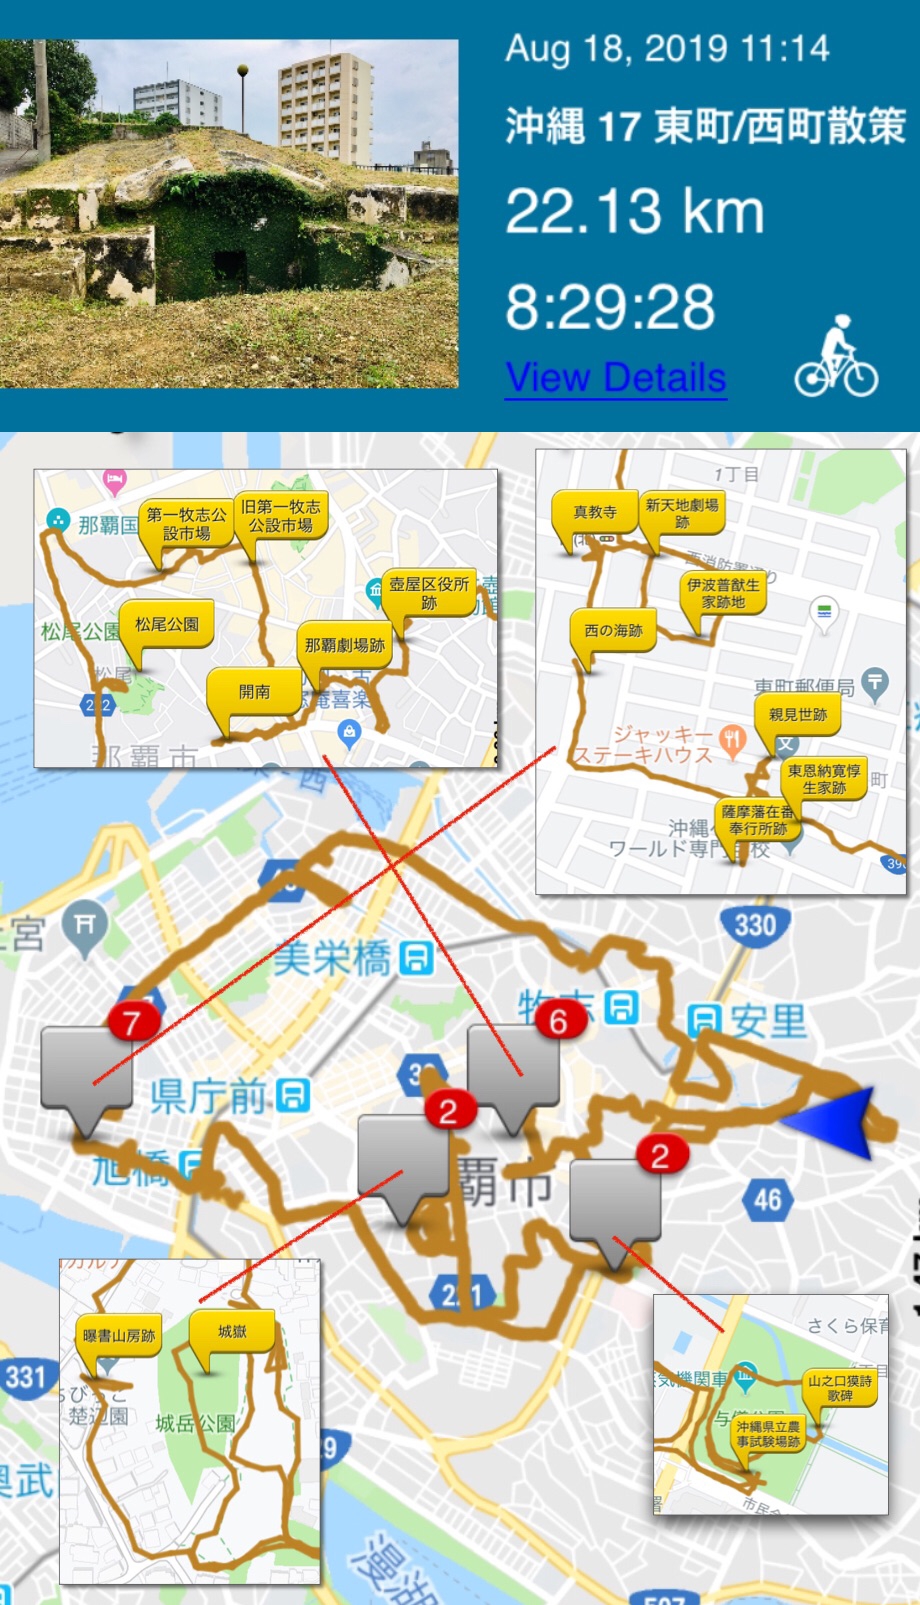 Okinawa 沖縄の旅 Day 17 (18/08/19) 東村/西町 他 | Kazu Bike Journey